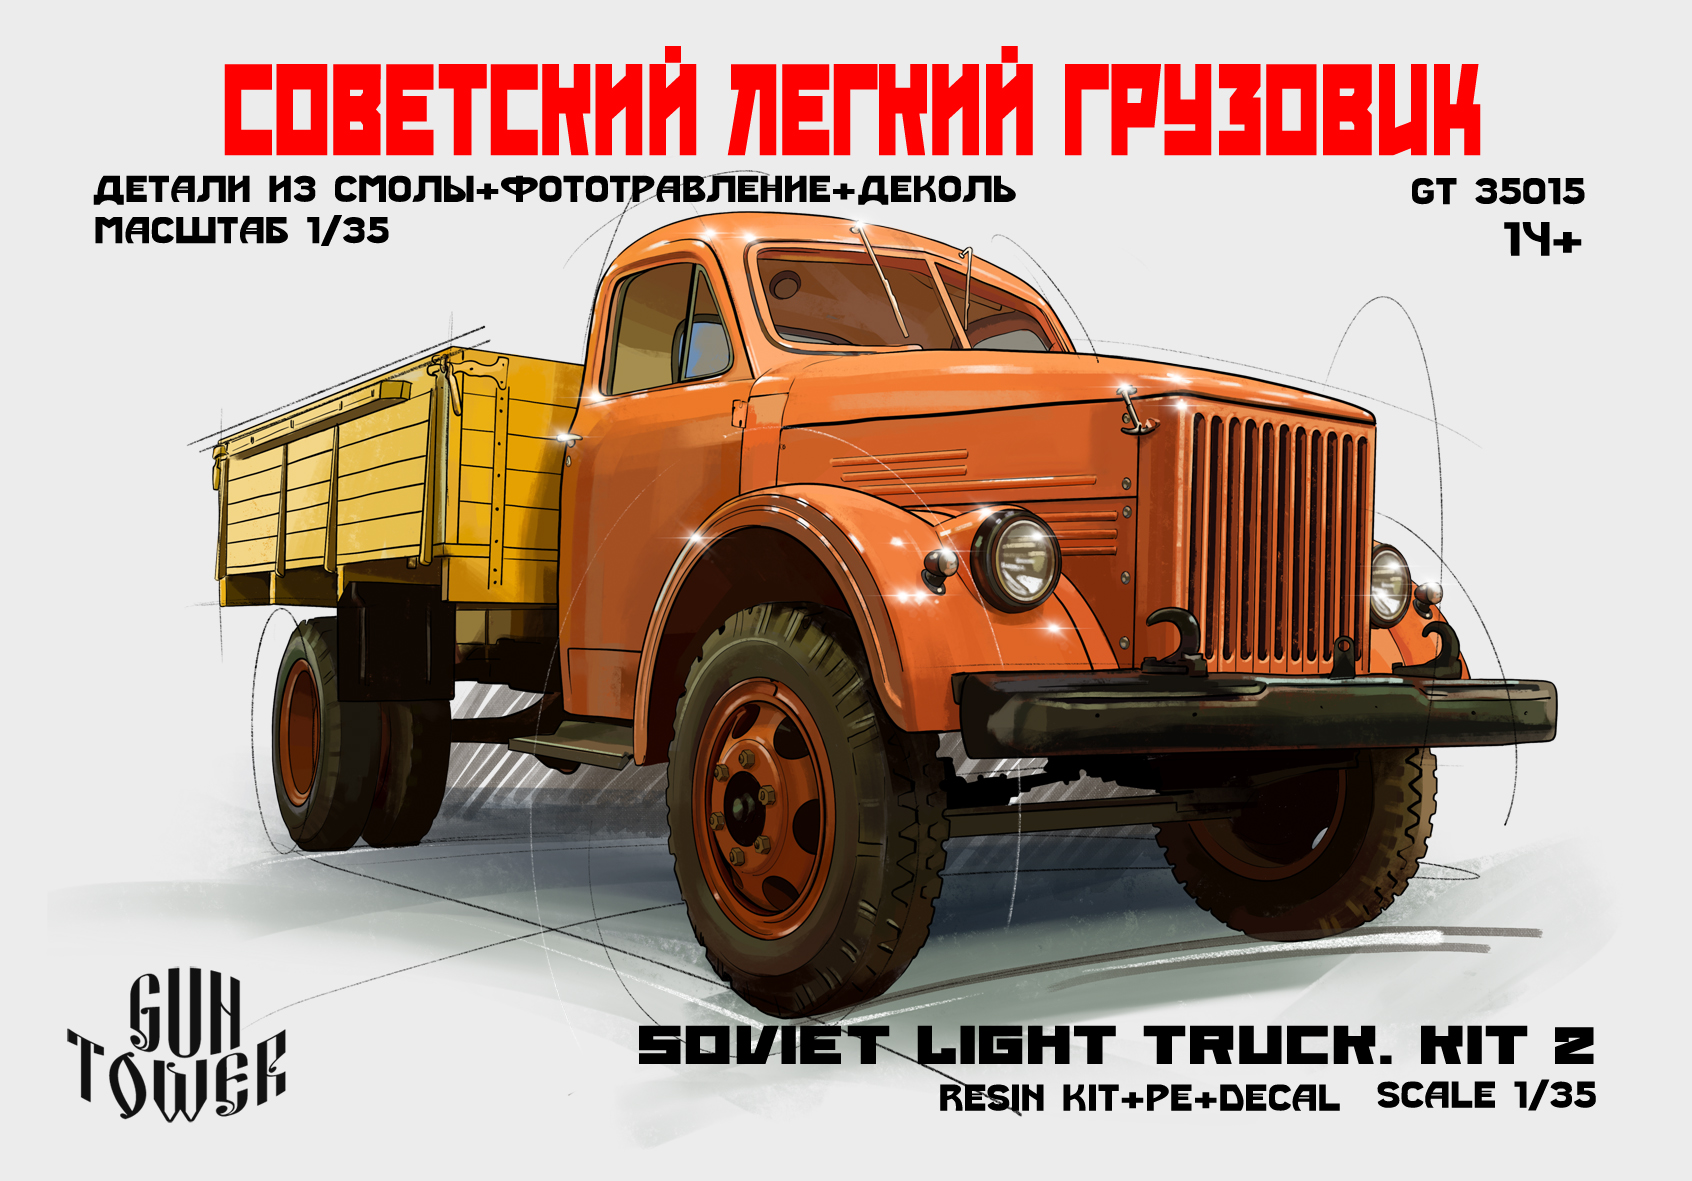 Soviet light truck. Kit 2